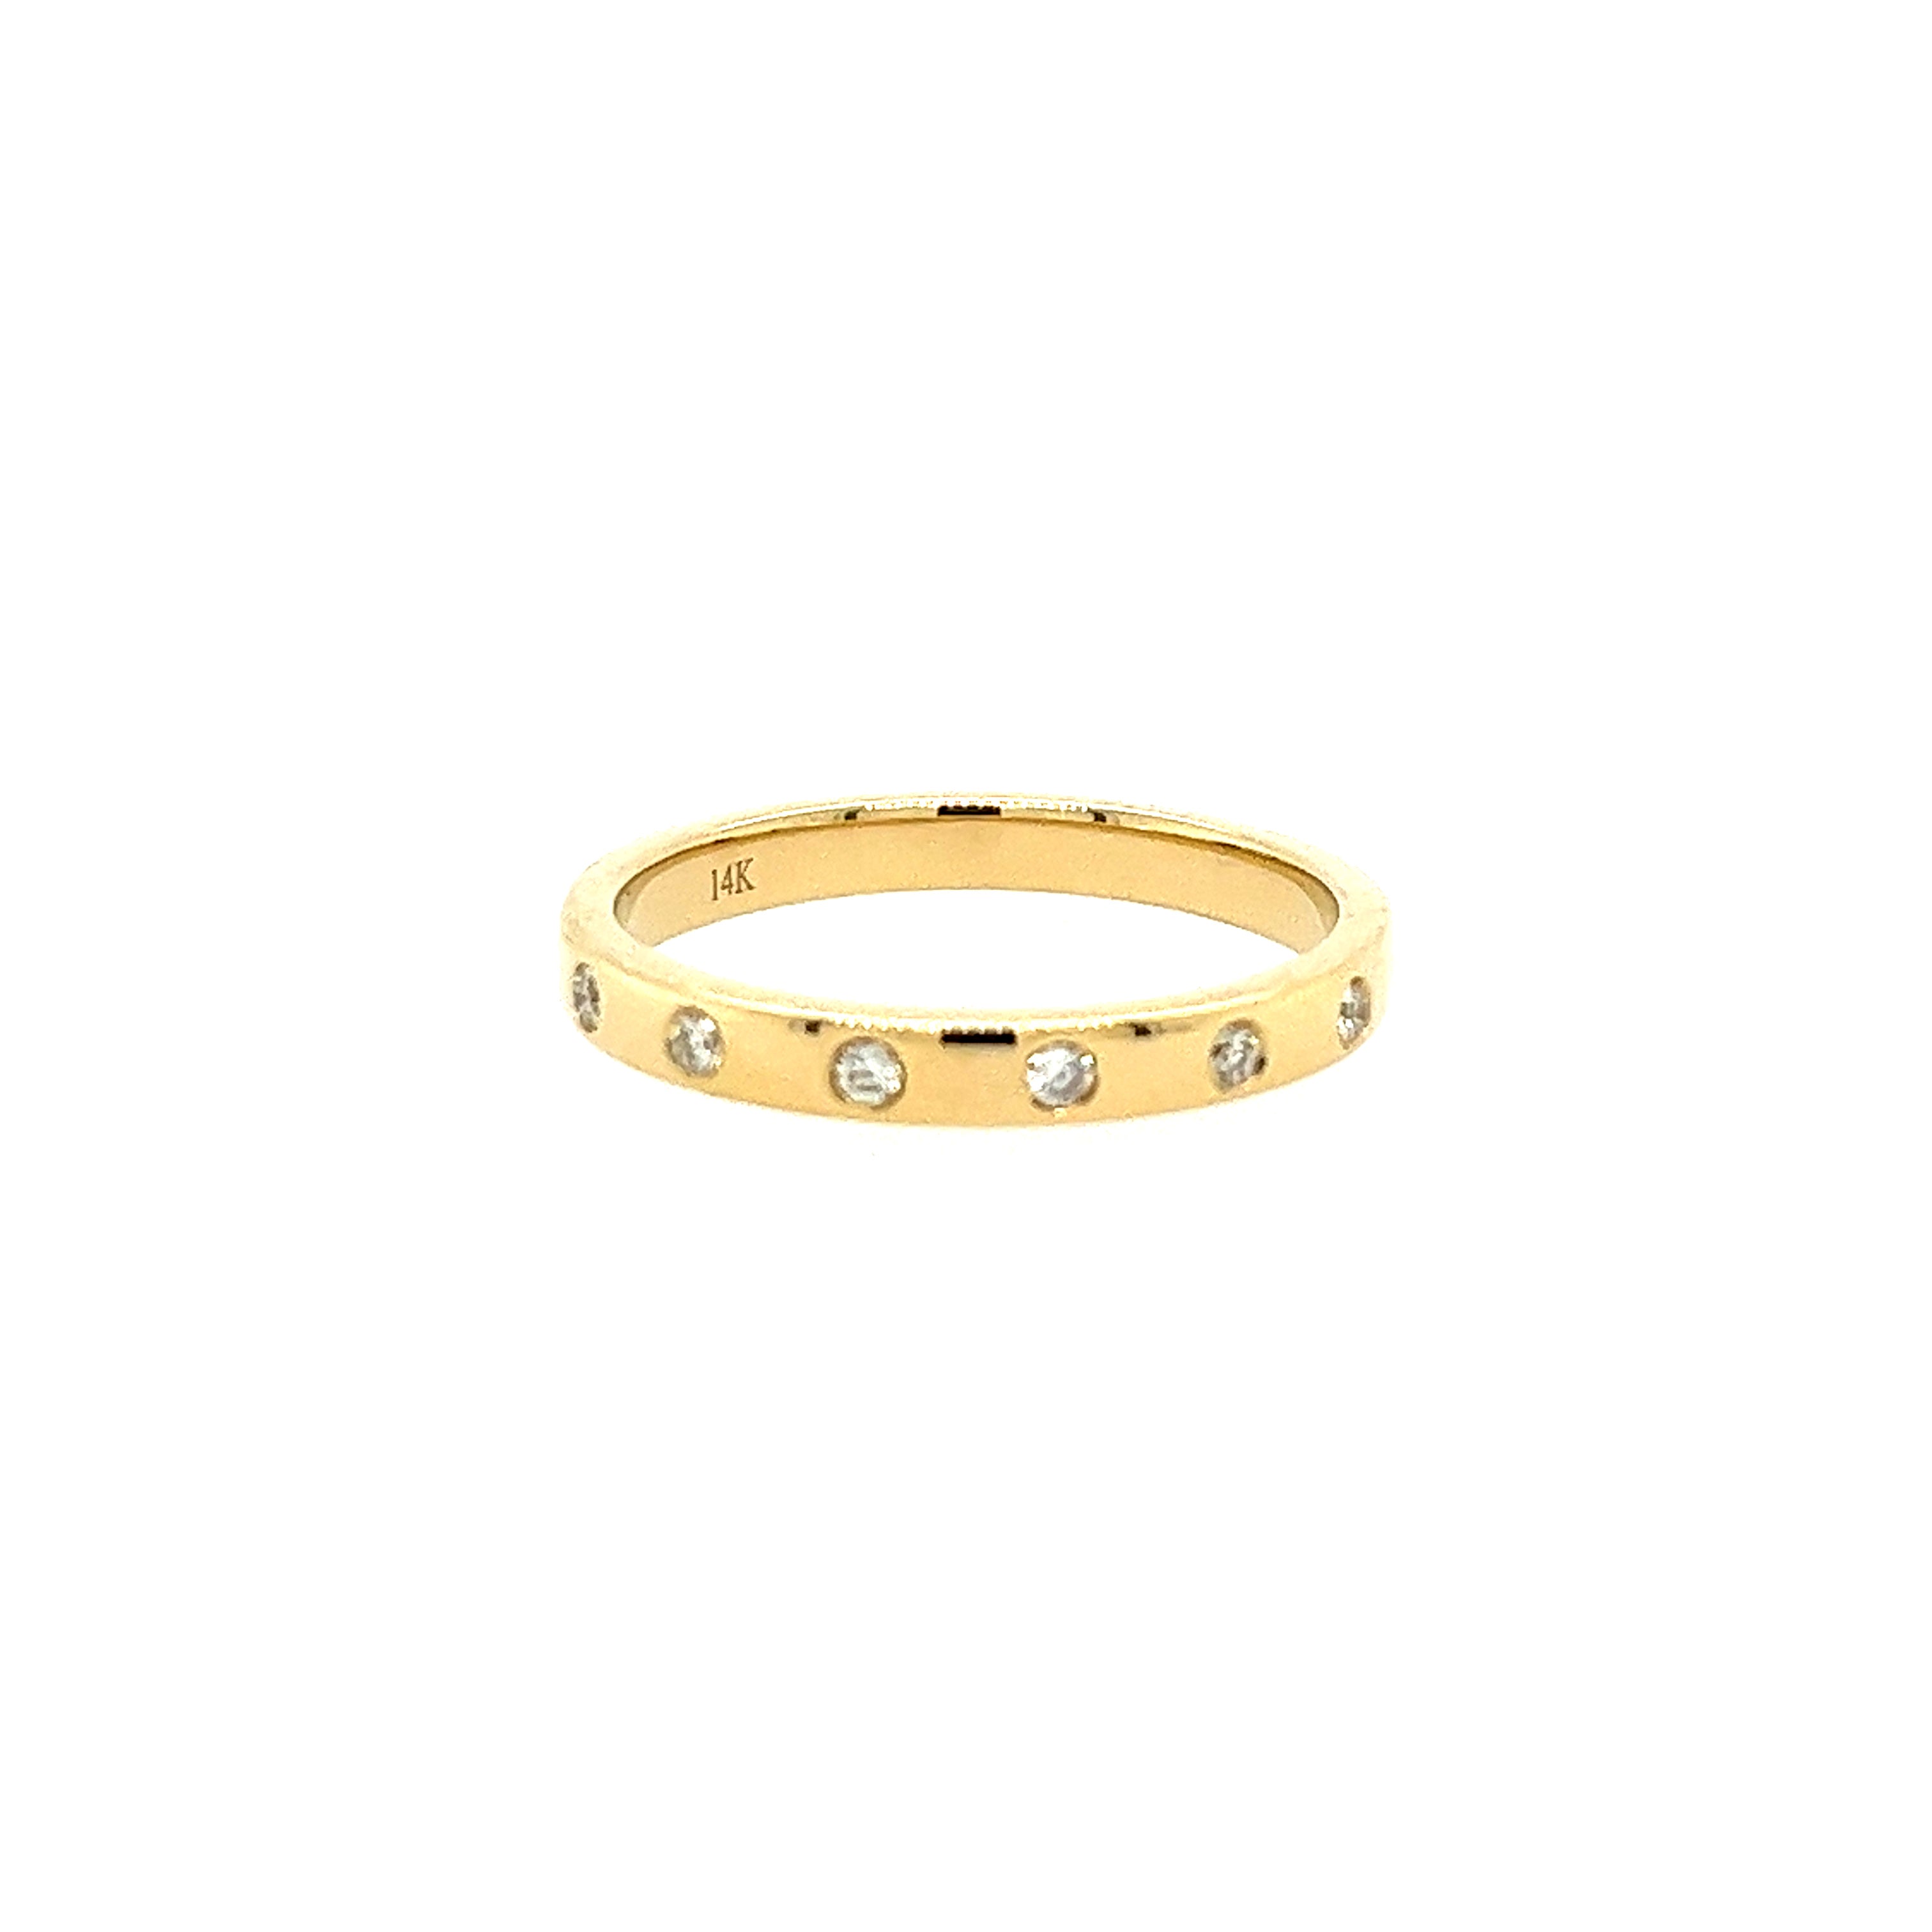 14K Yellow Gold Lakeshore Diamond Fashion Ring